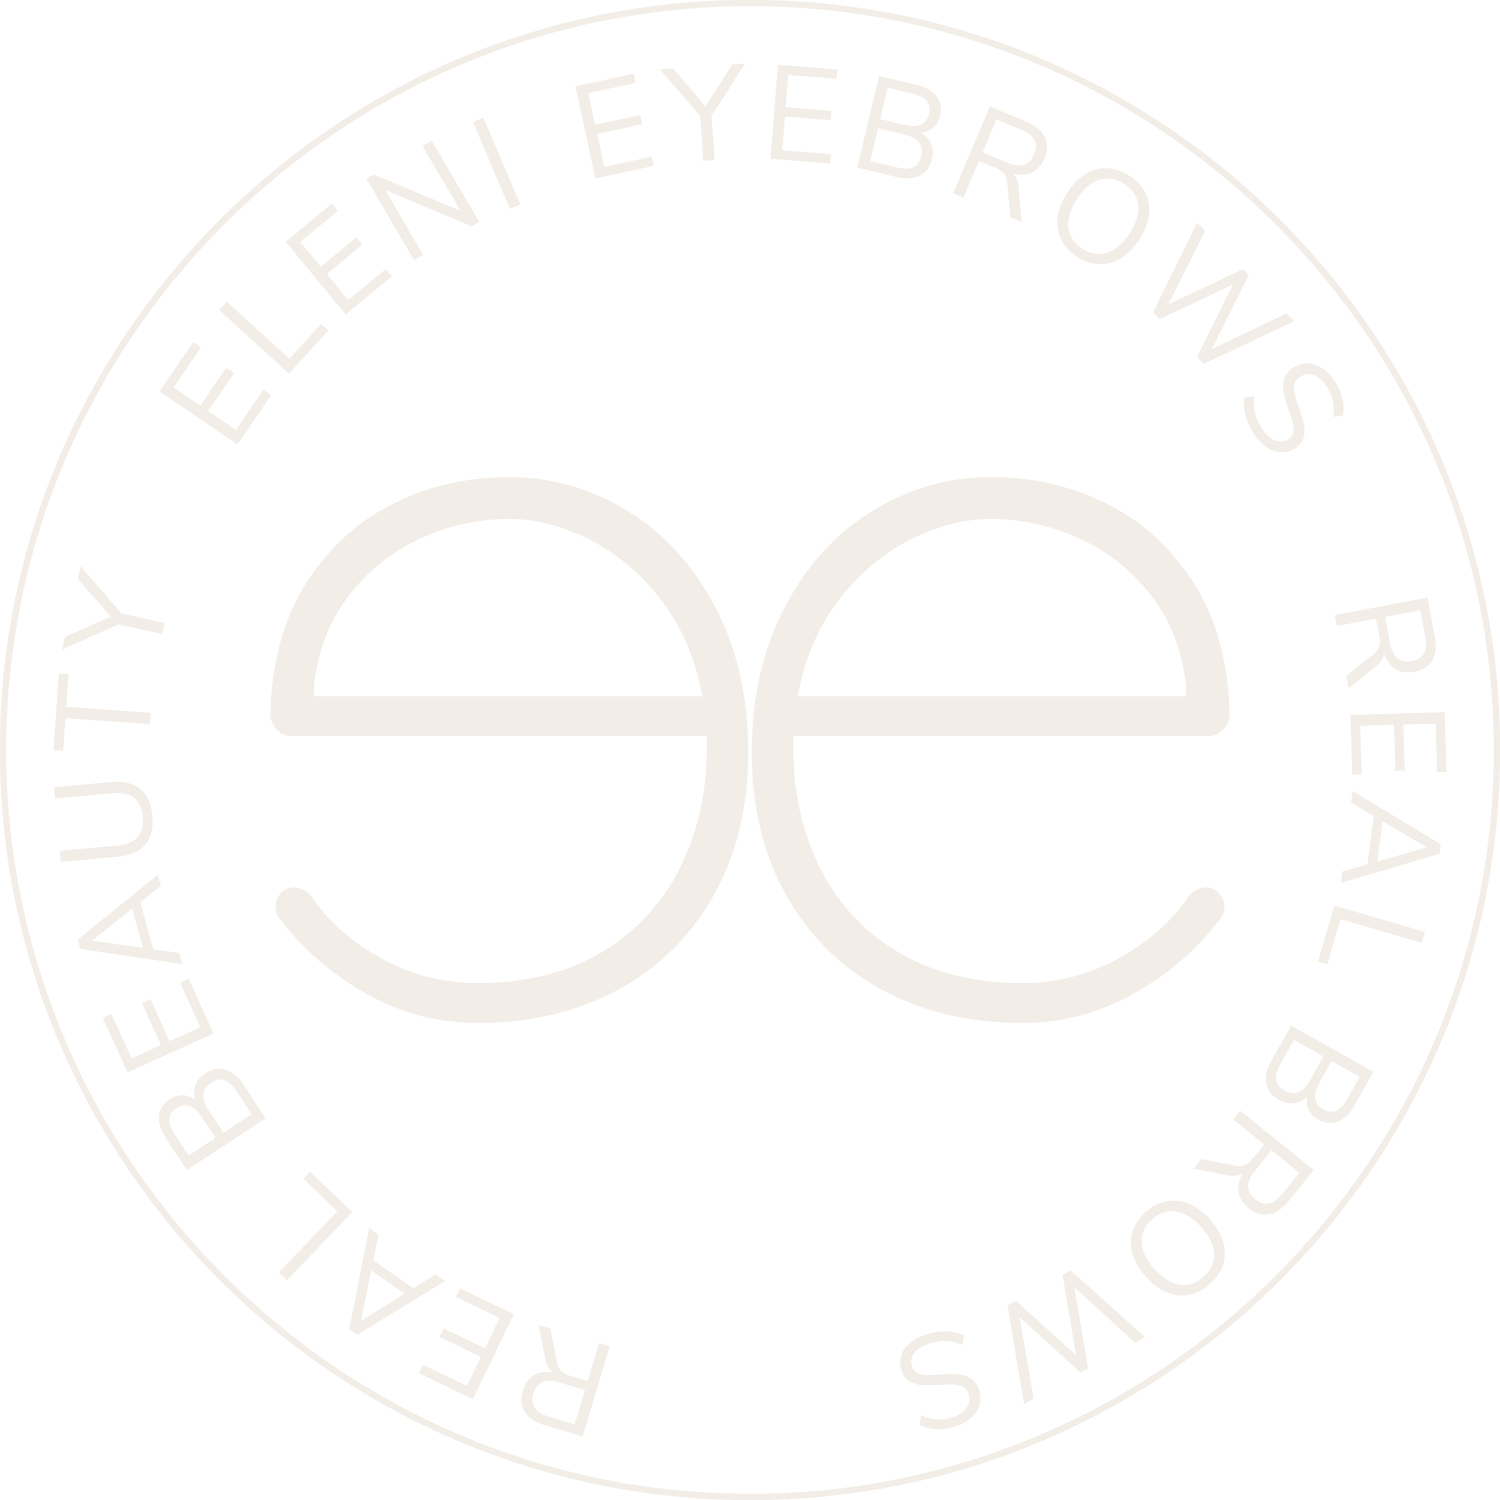 Eleni Eyebrows